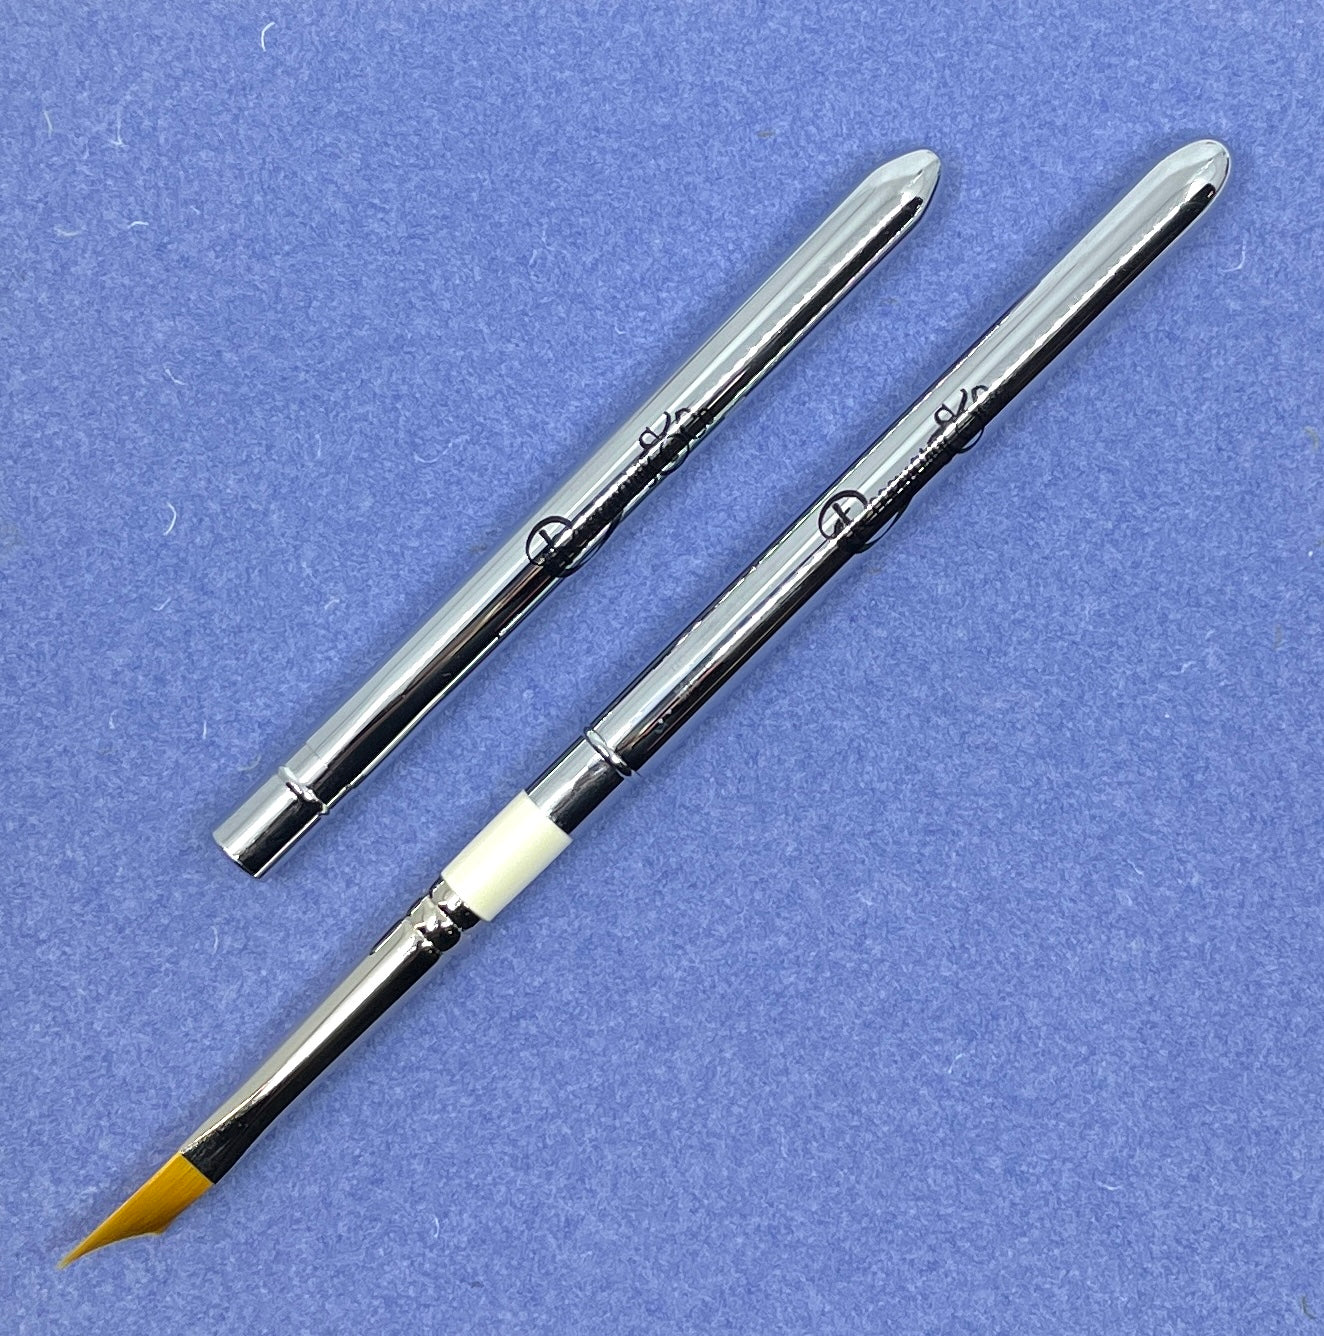 ROSEMARY & CO Reversible Pocket Brush - R18 - Golden Synthetic - Triangular - Size 8 (6 x 18mm)